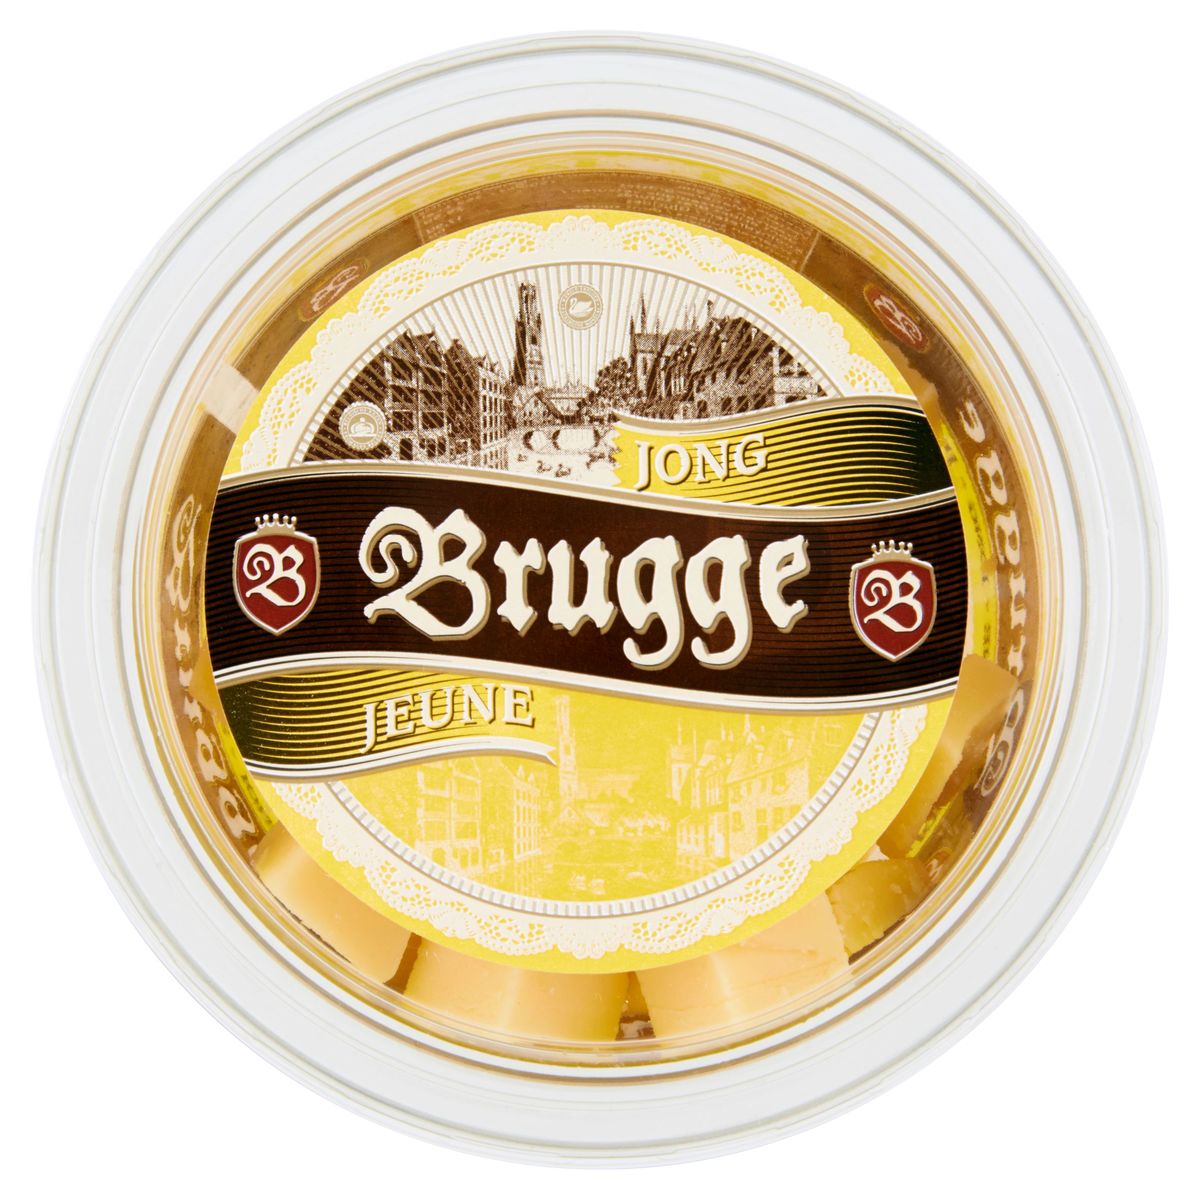 Brugge Jeune Cubes 150 g